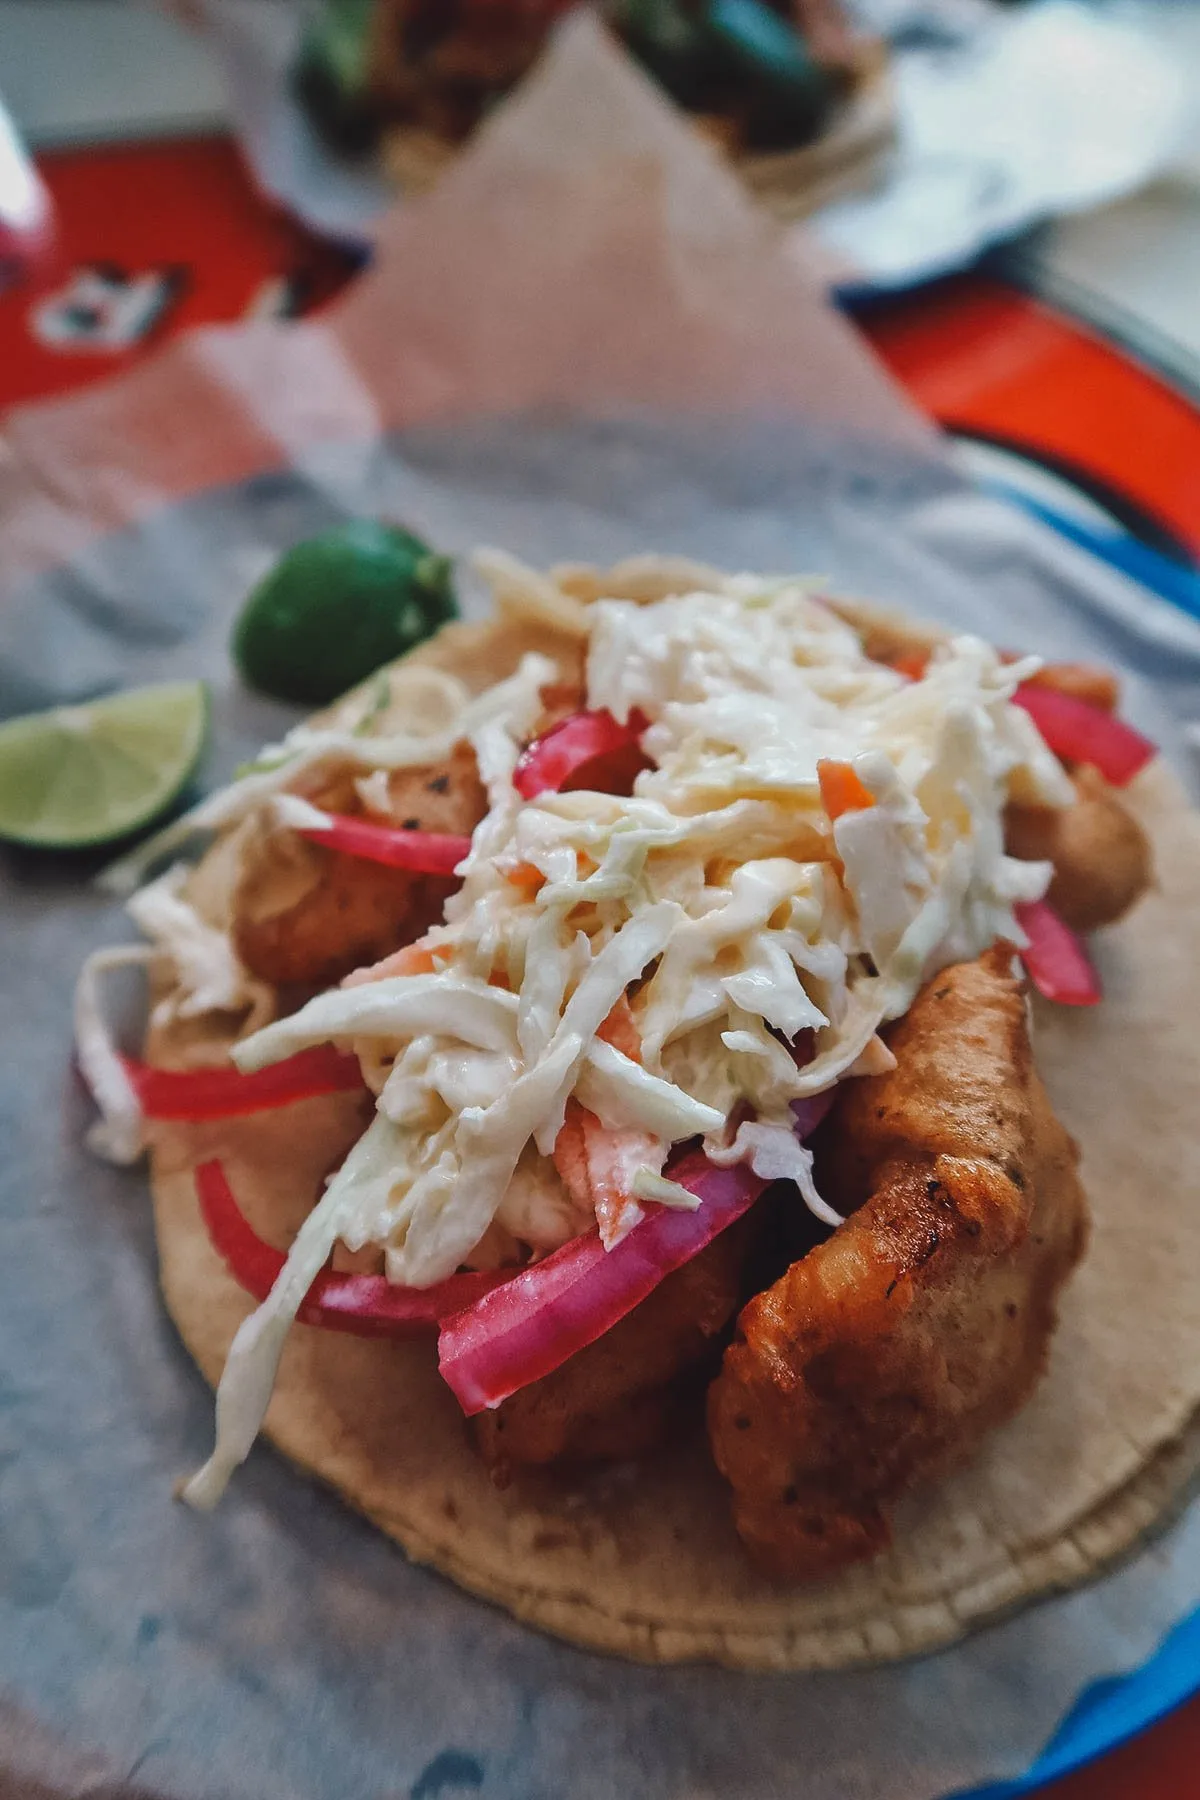 Shrimp tacos at a restaurant in Mexico City